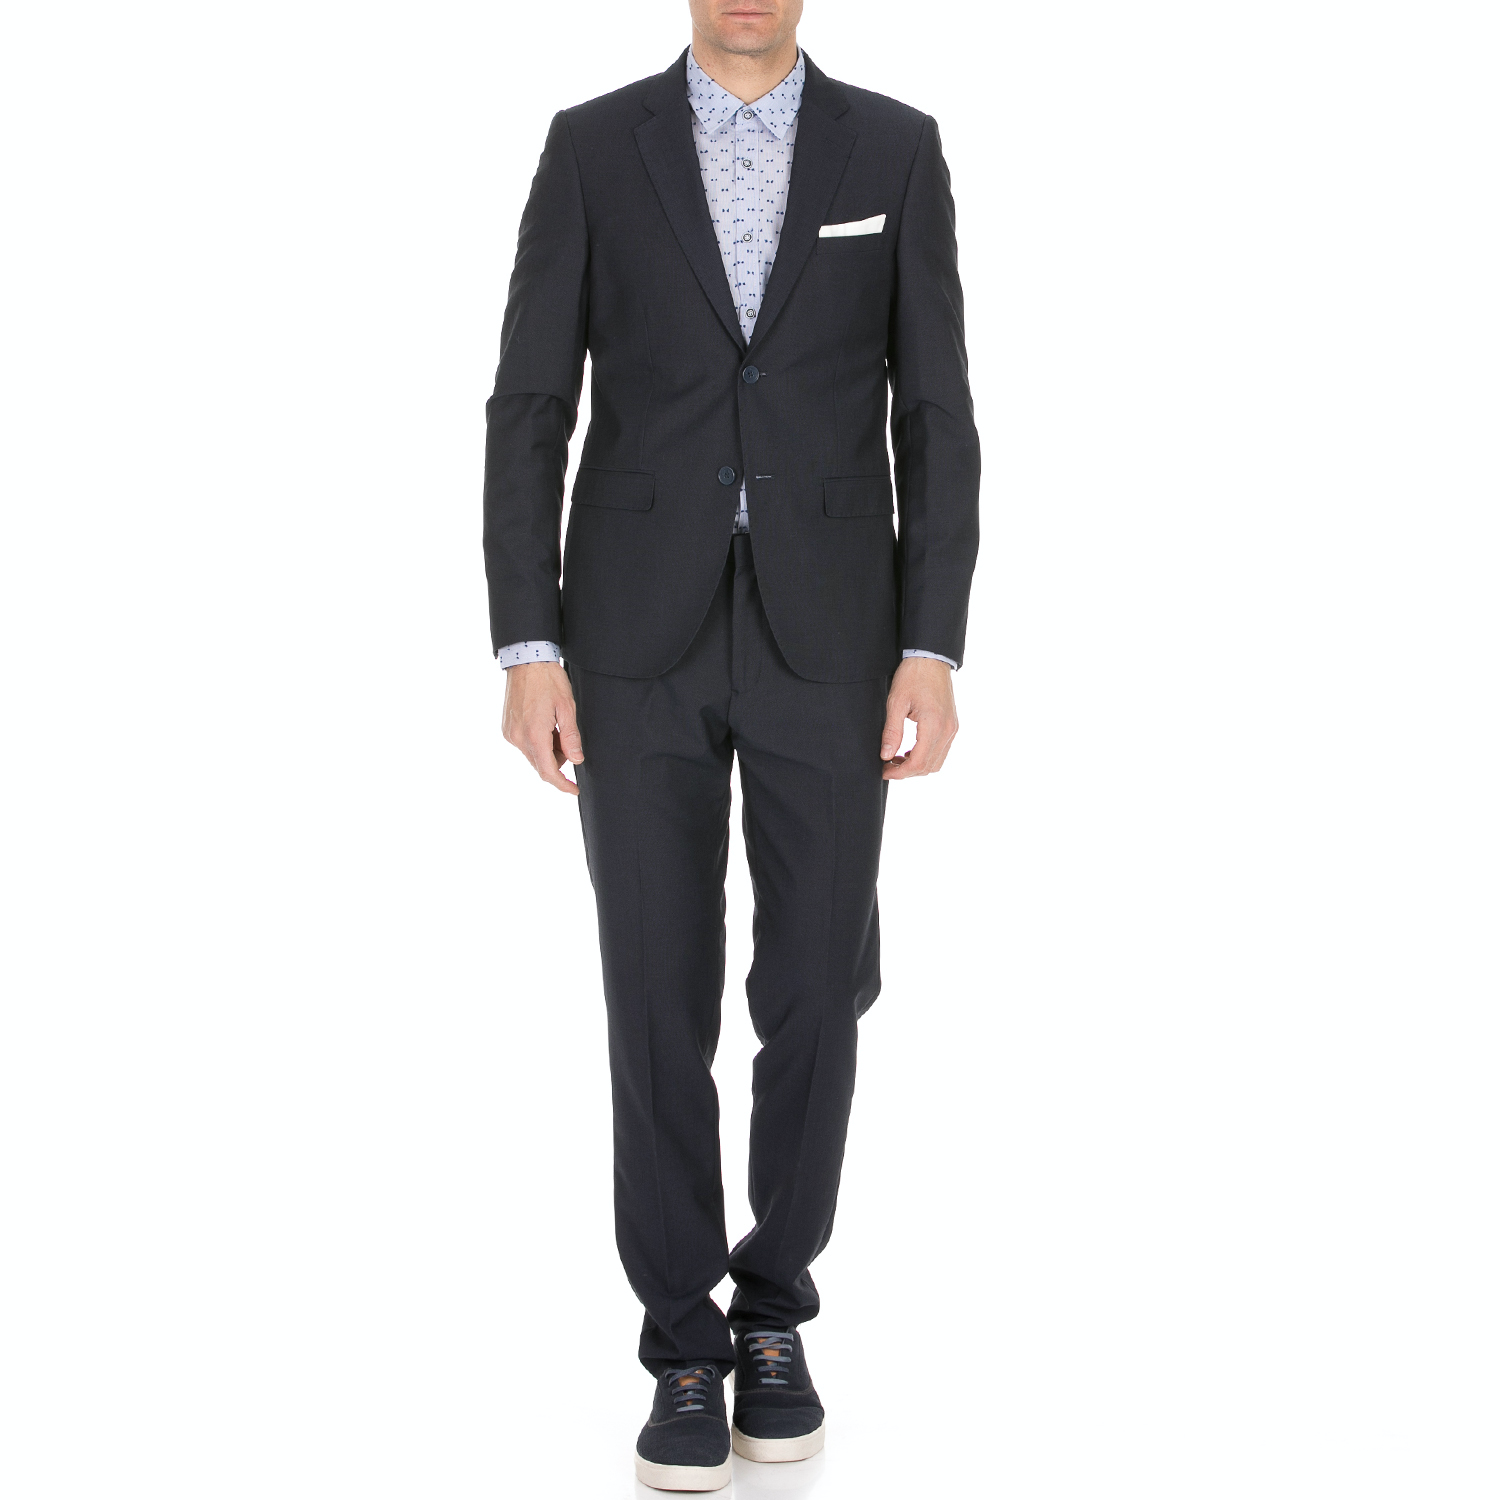 SSEINSE - Ανδρικό κοστούμι ABITO SSEINSE μπλε Ανδρικά/Ρούχα/Πανωφόρια/Σακάκια